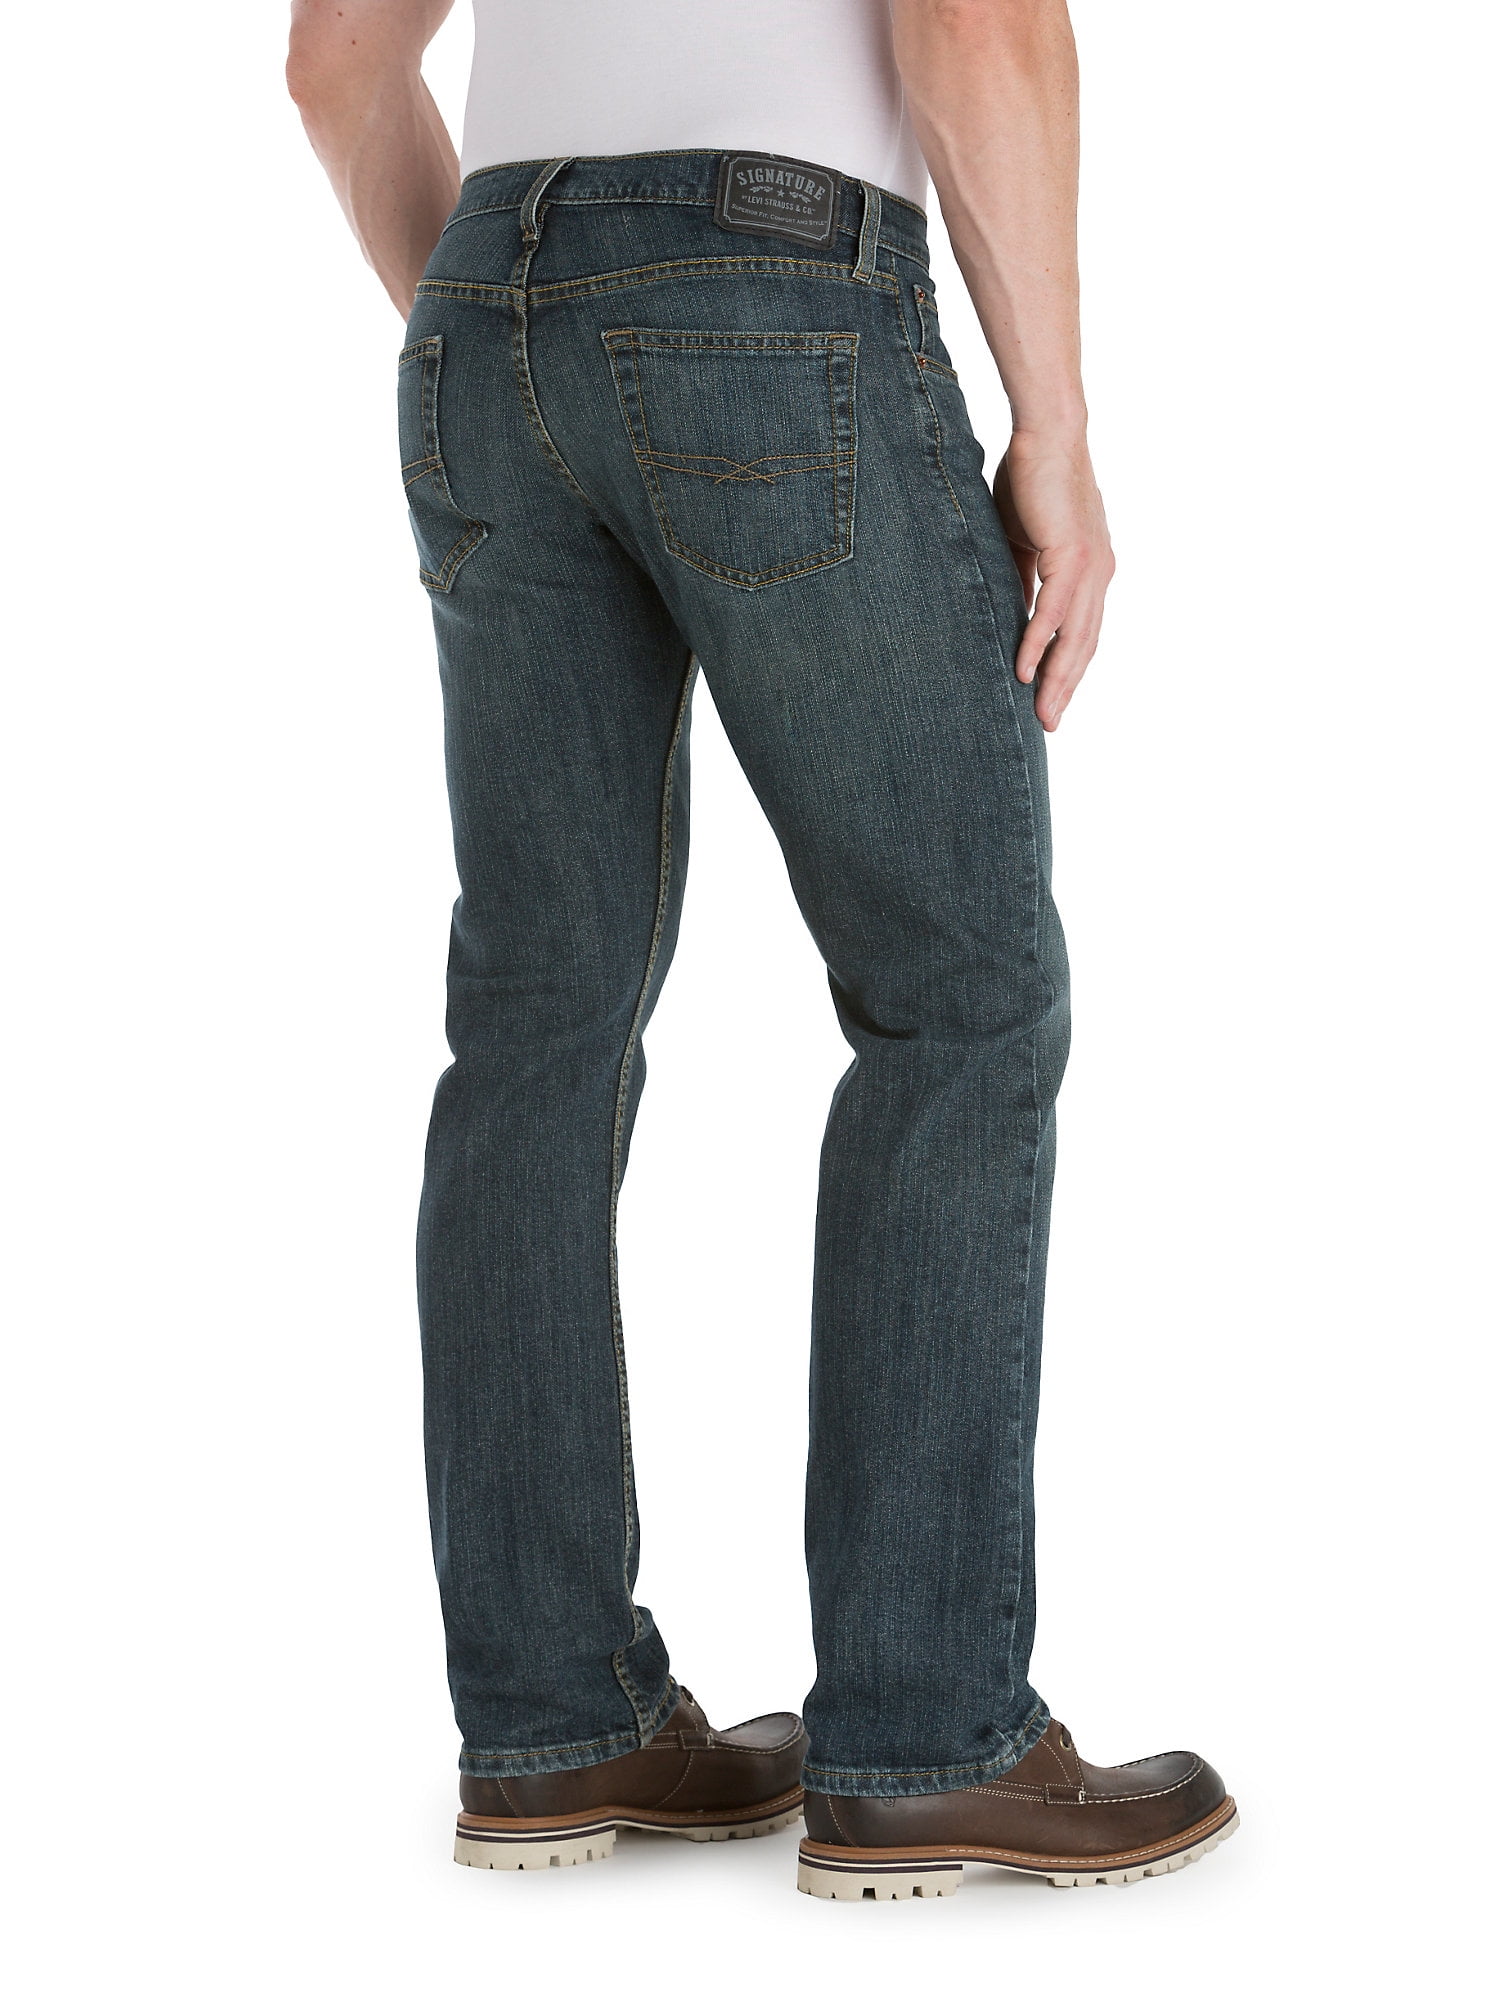 walmart levi jeans